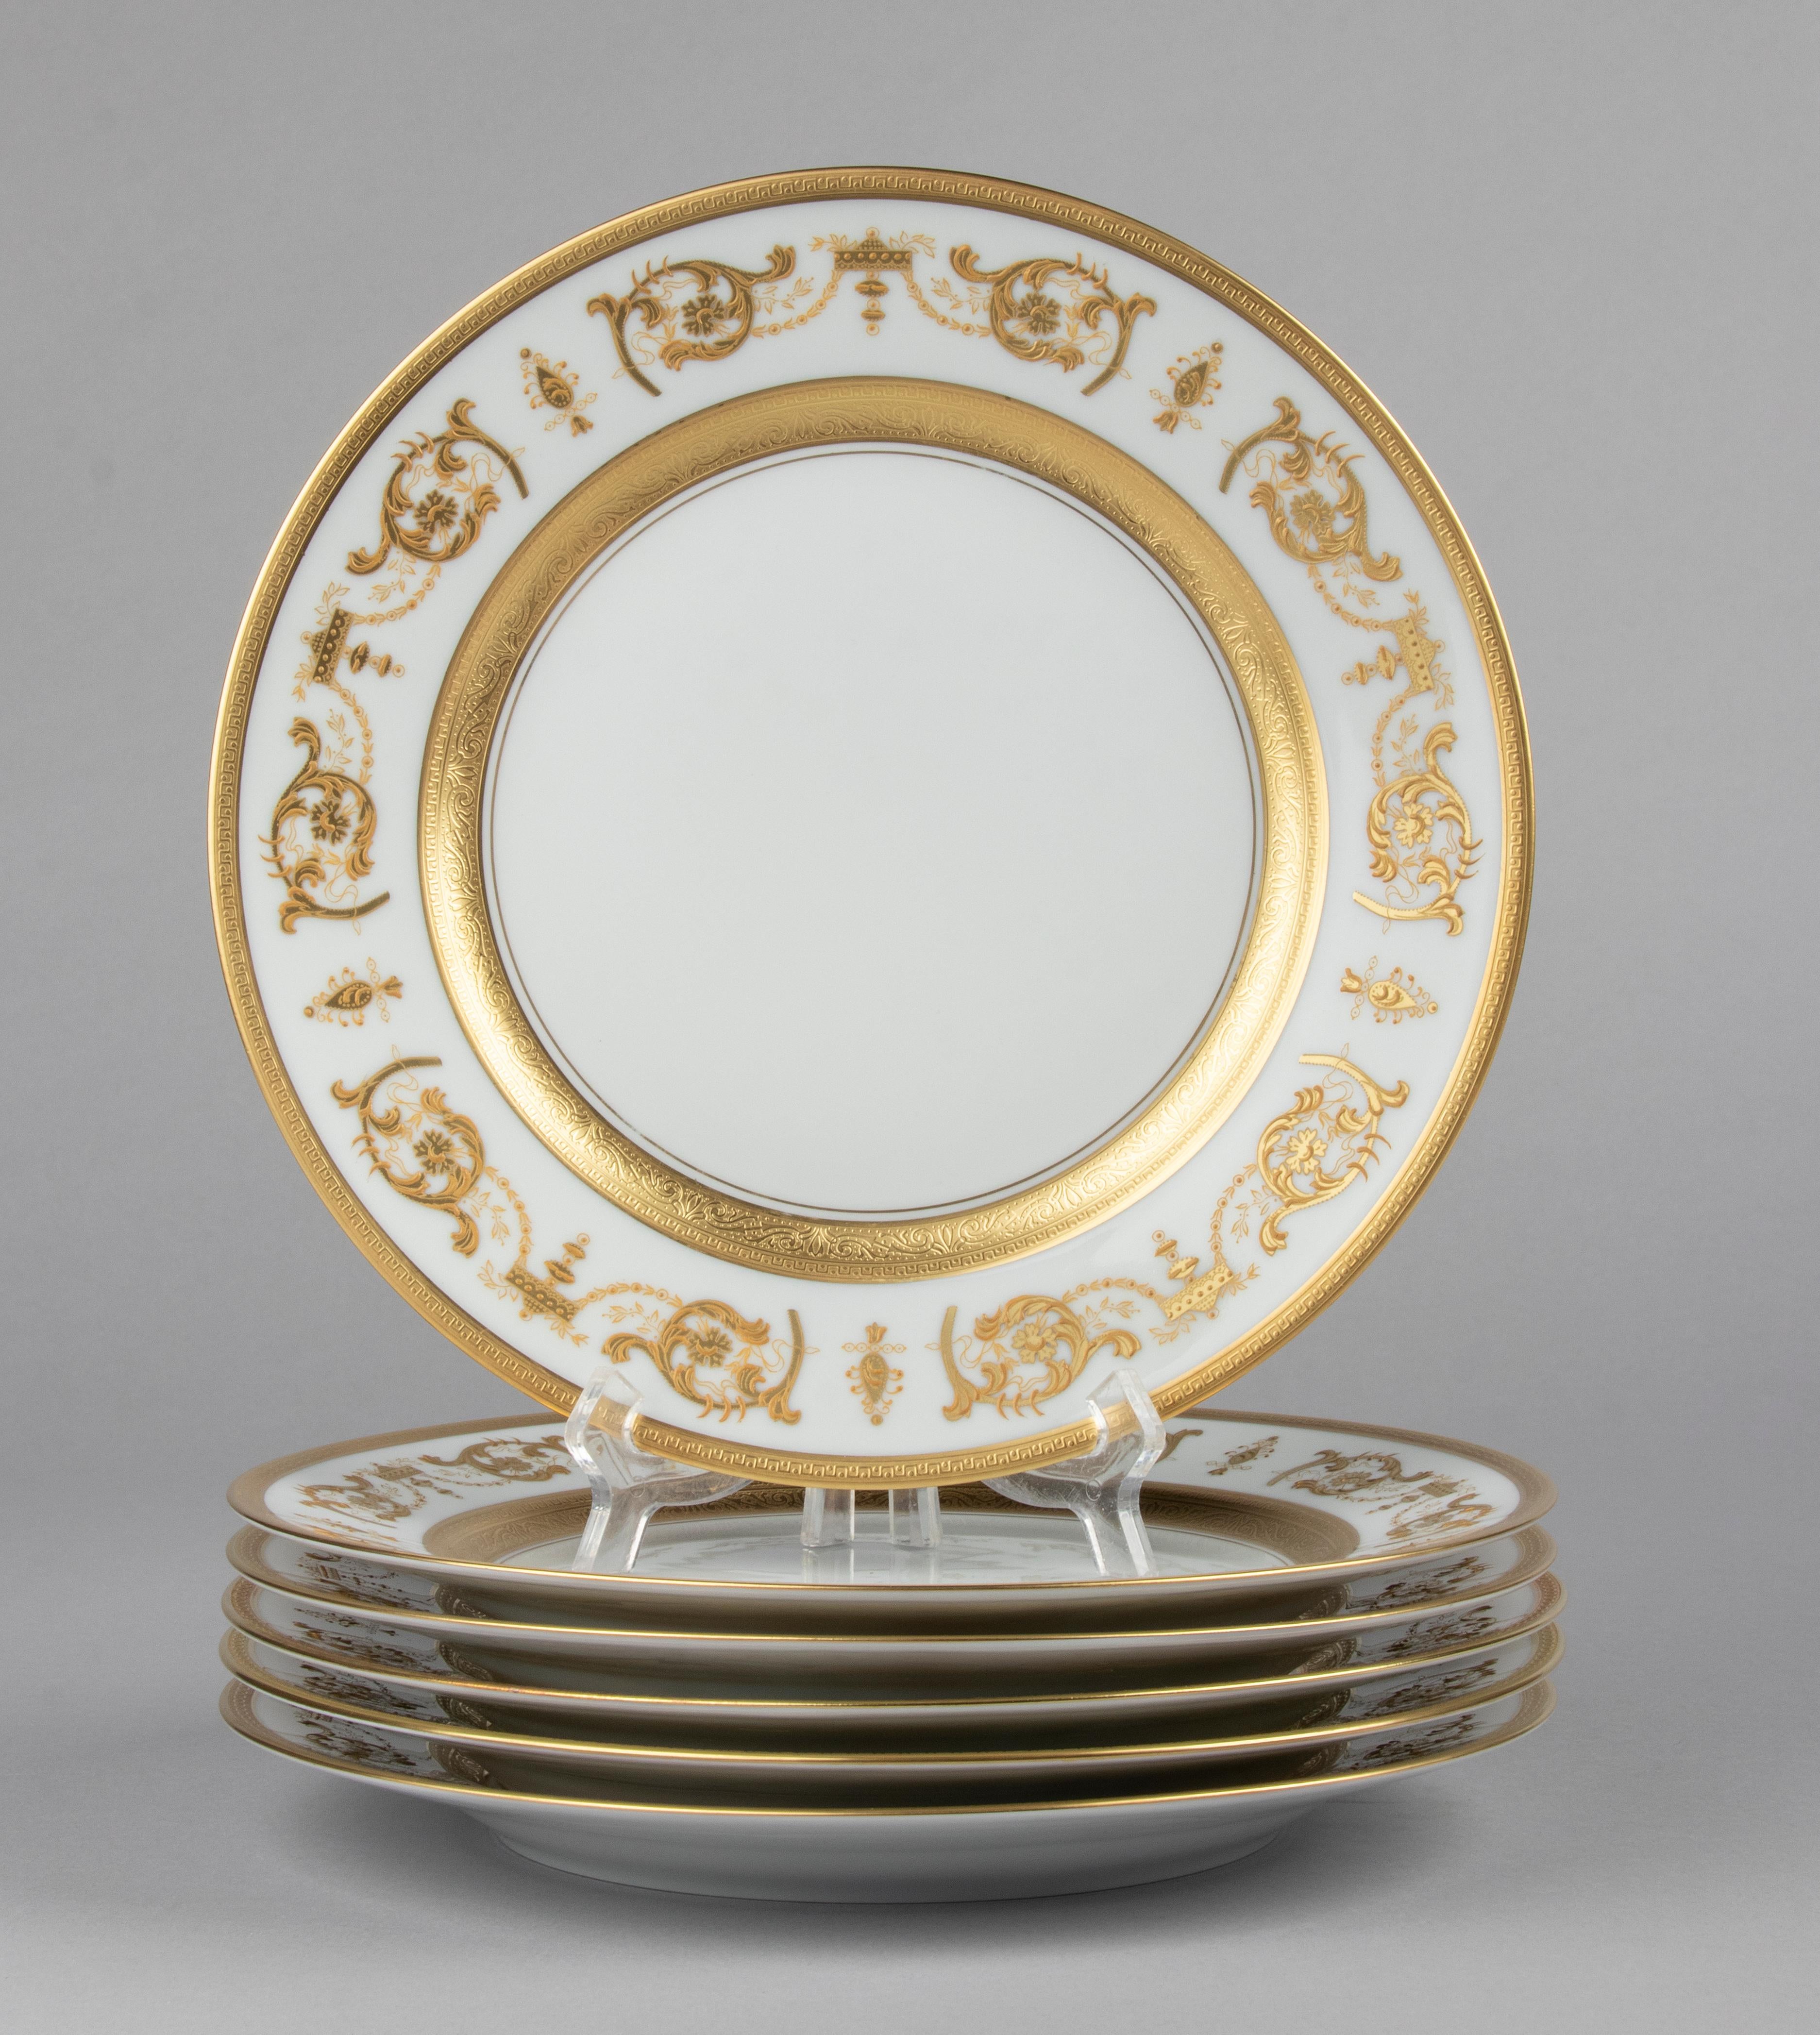 French Set of 6 Porcelain Dinner Plates made by Haviland model Impérator Or